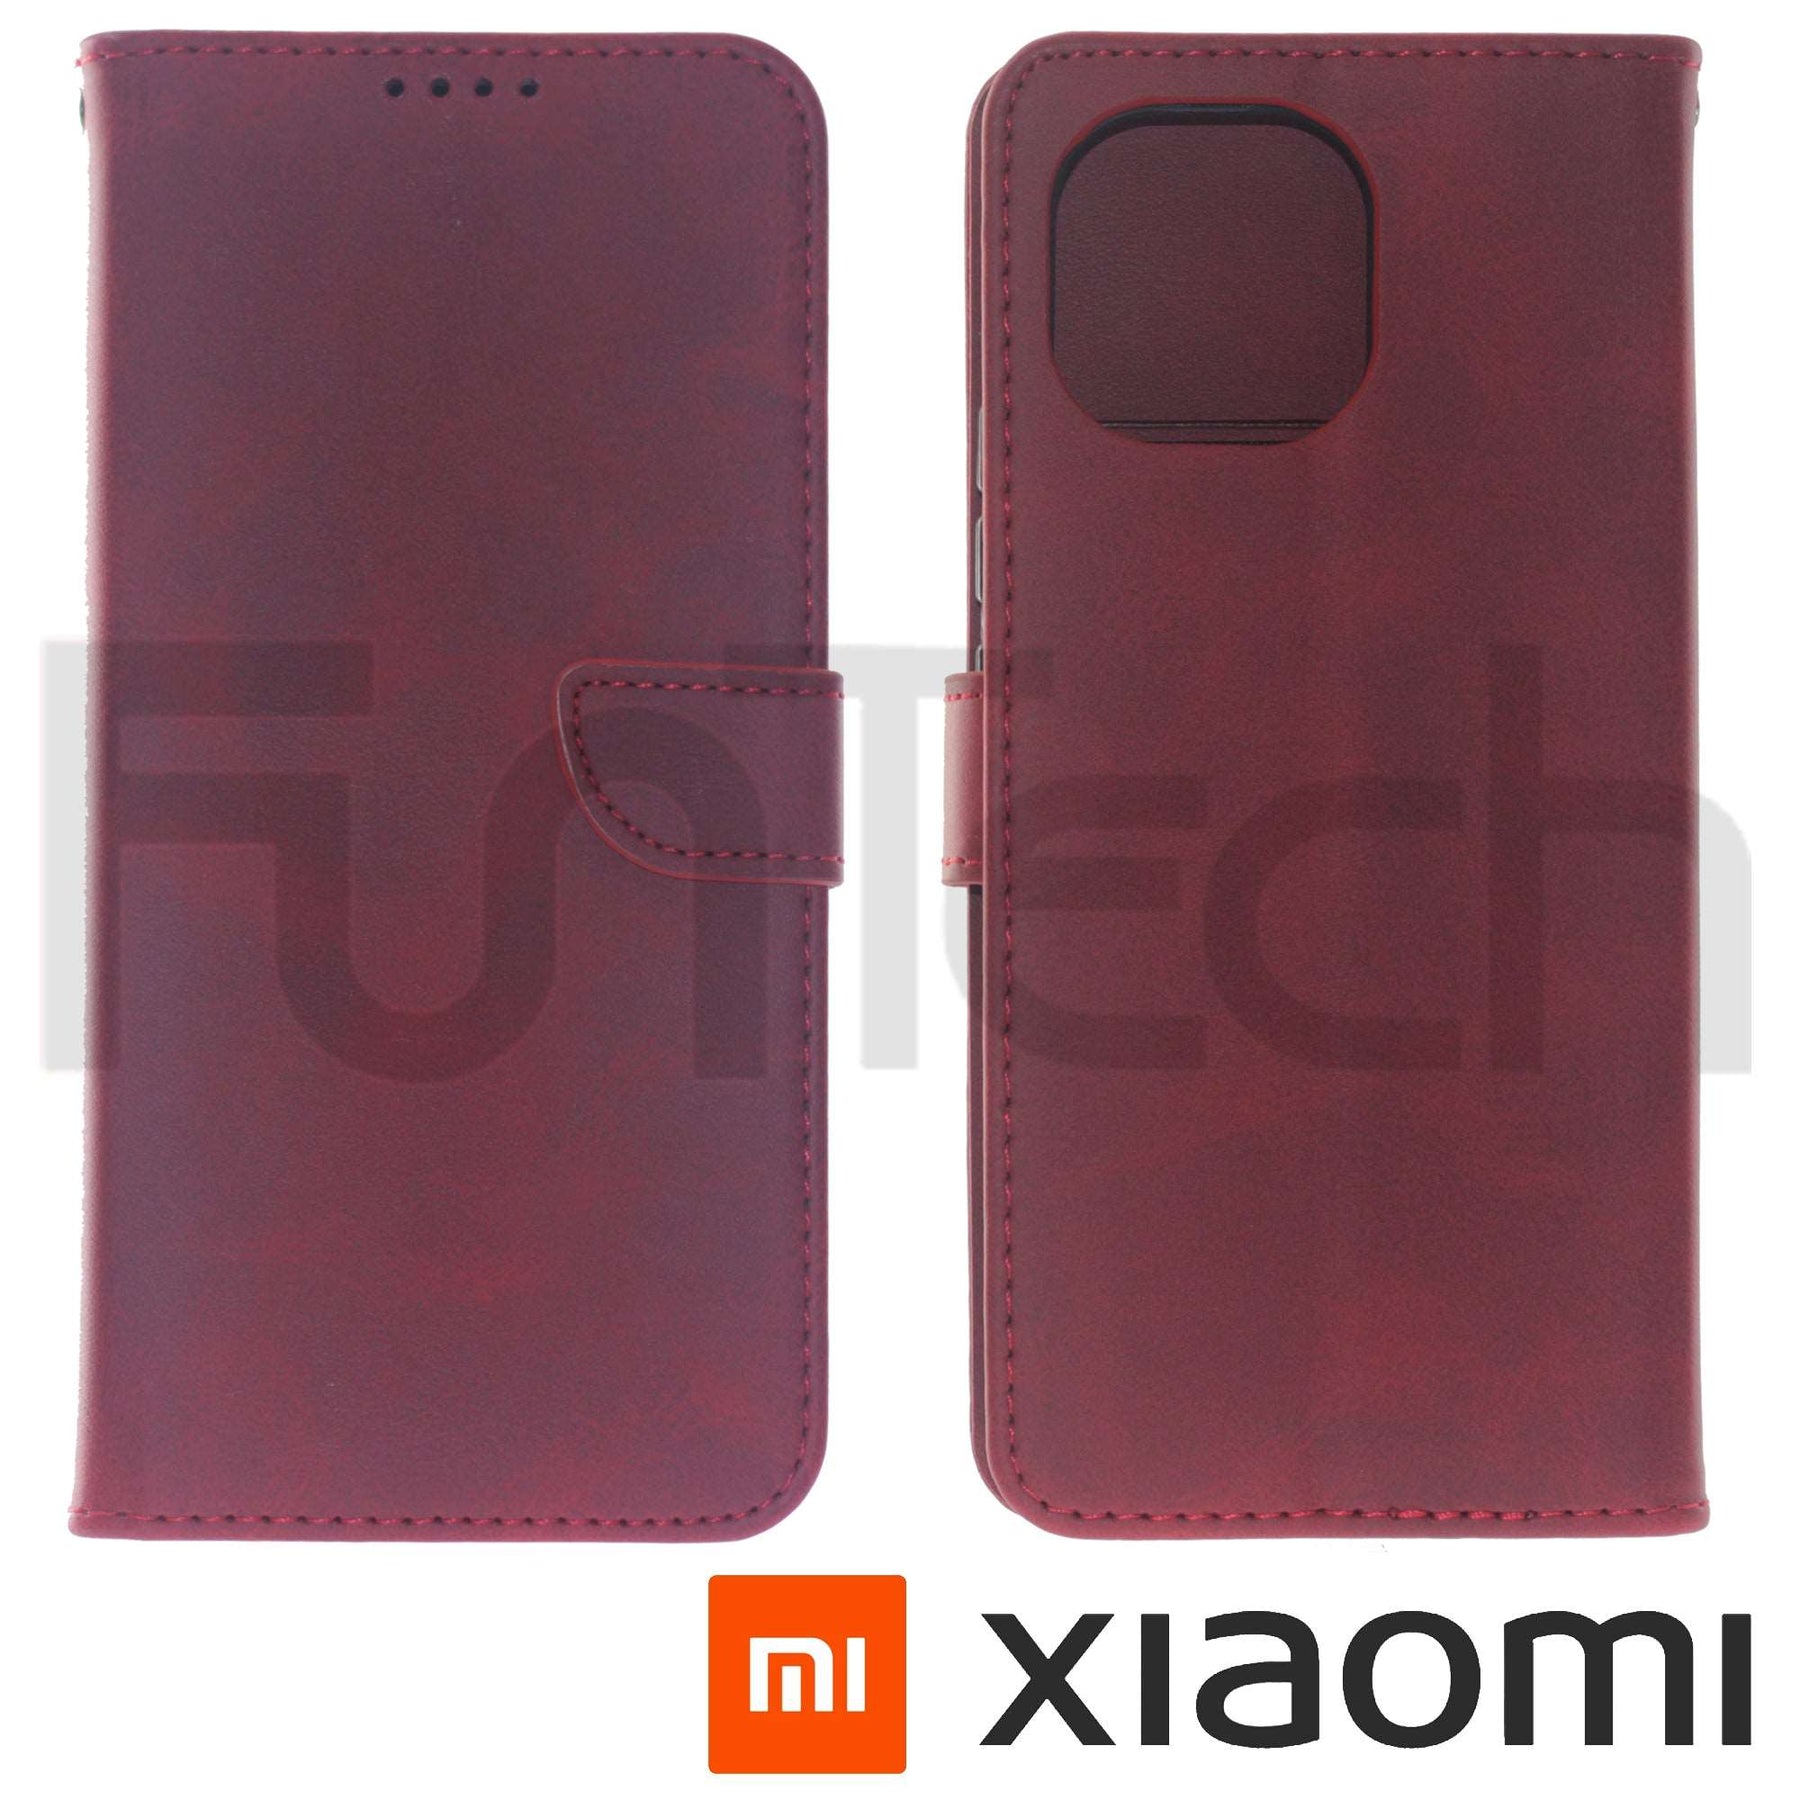 Xiaomi Mi11, Leather Wallet Case, Color Red.